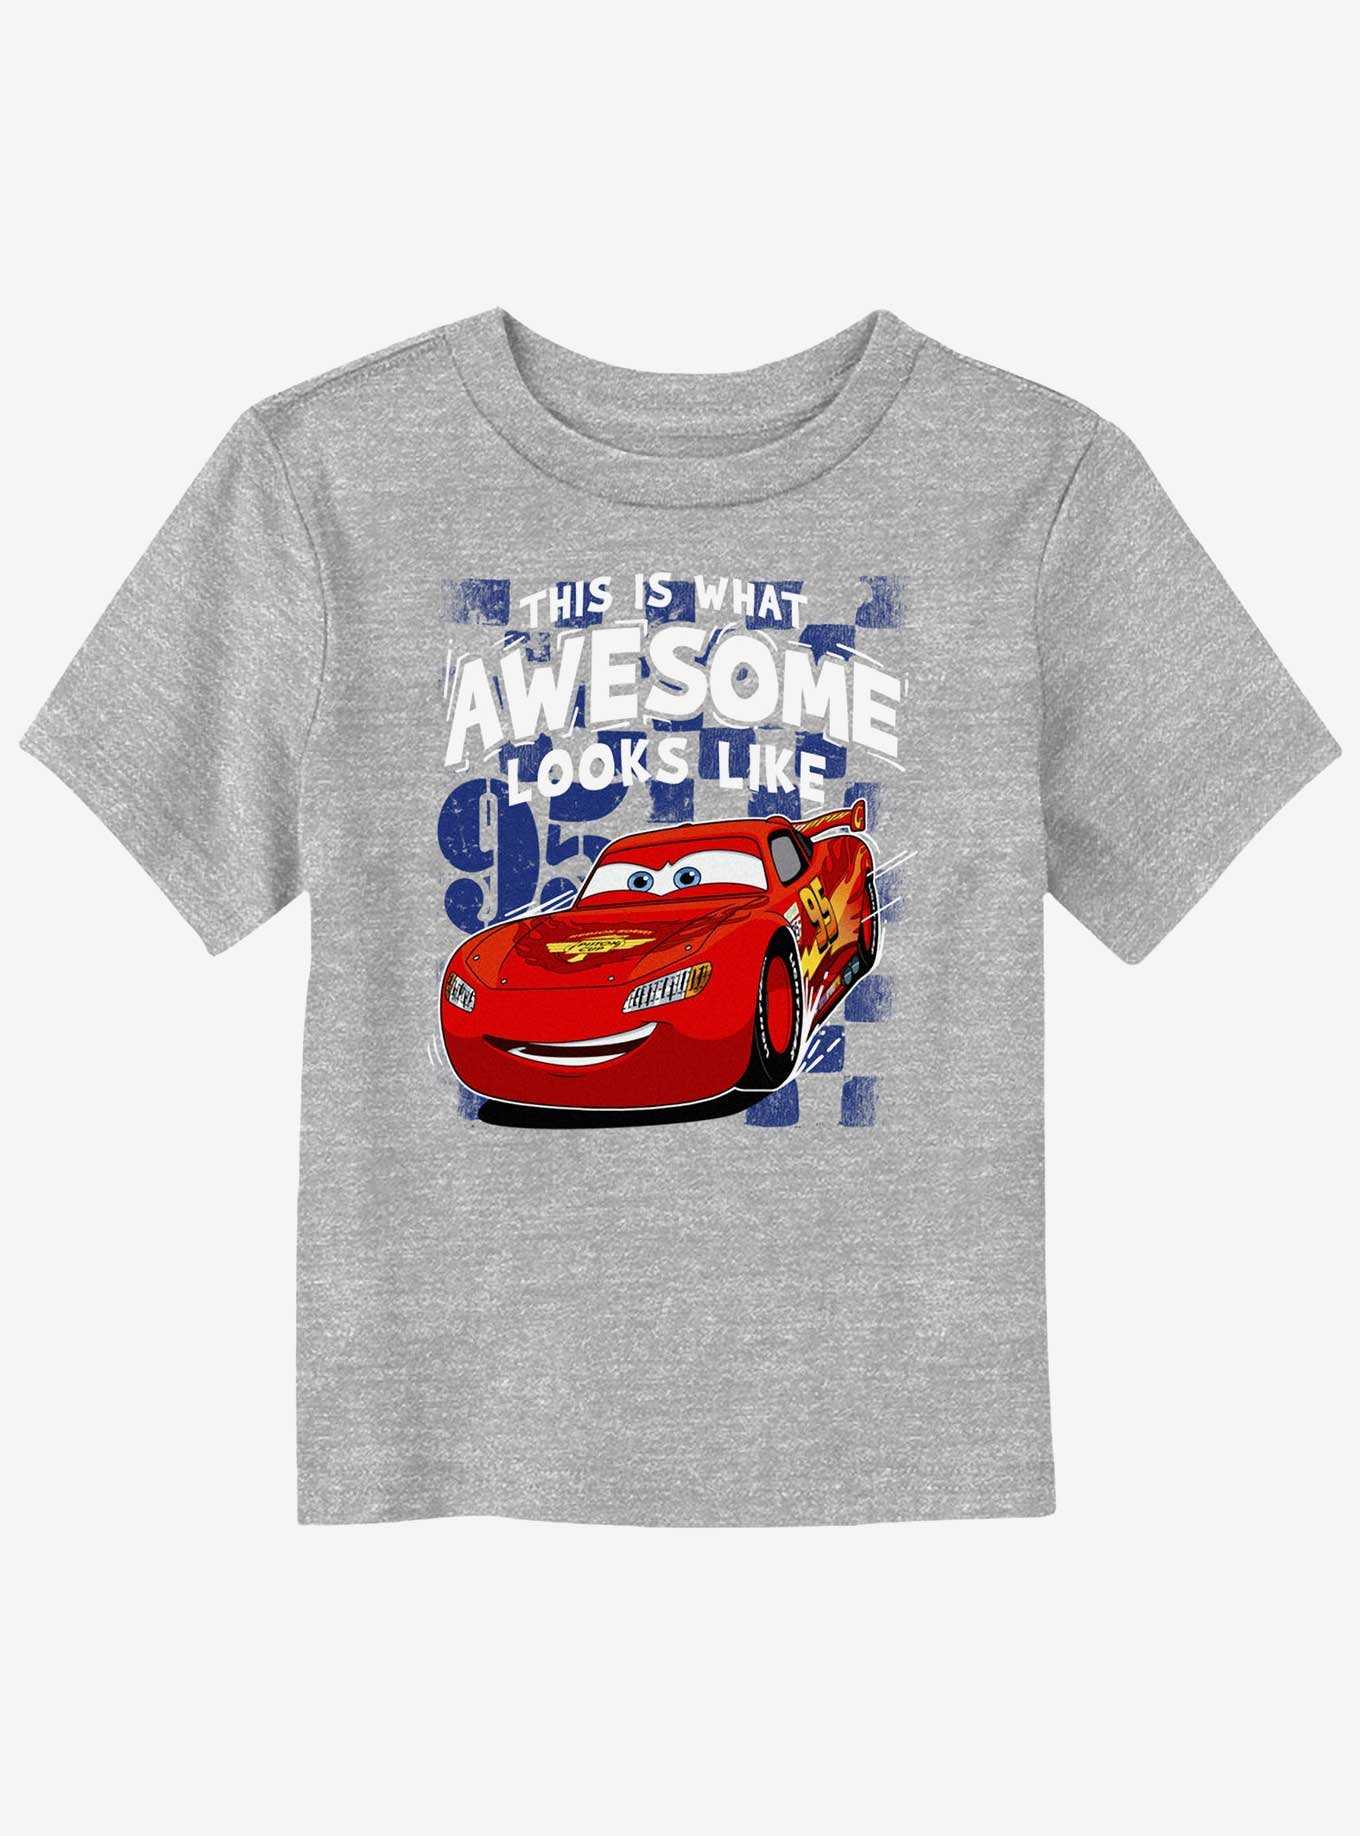 Disney Pixar Cars What Awesome Looks Like Toddler T-Shirt, , hi-res